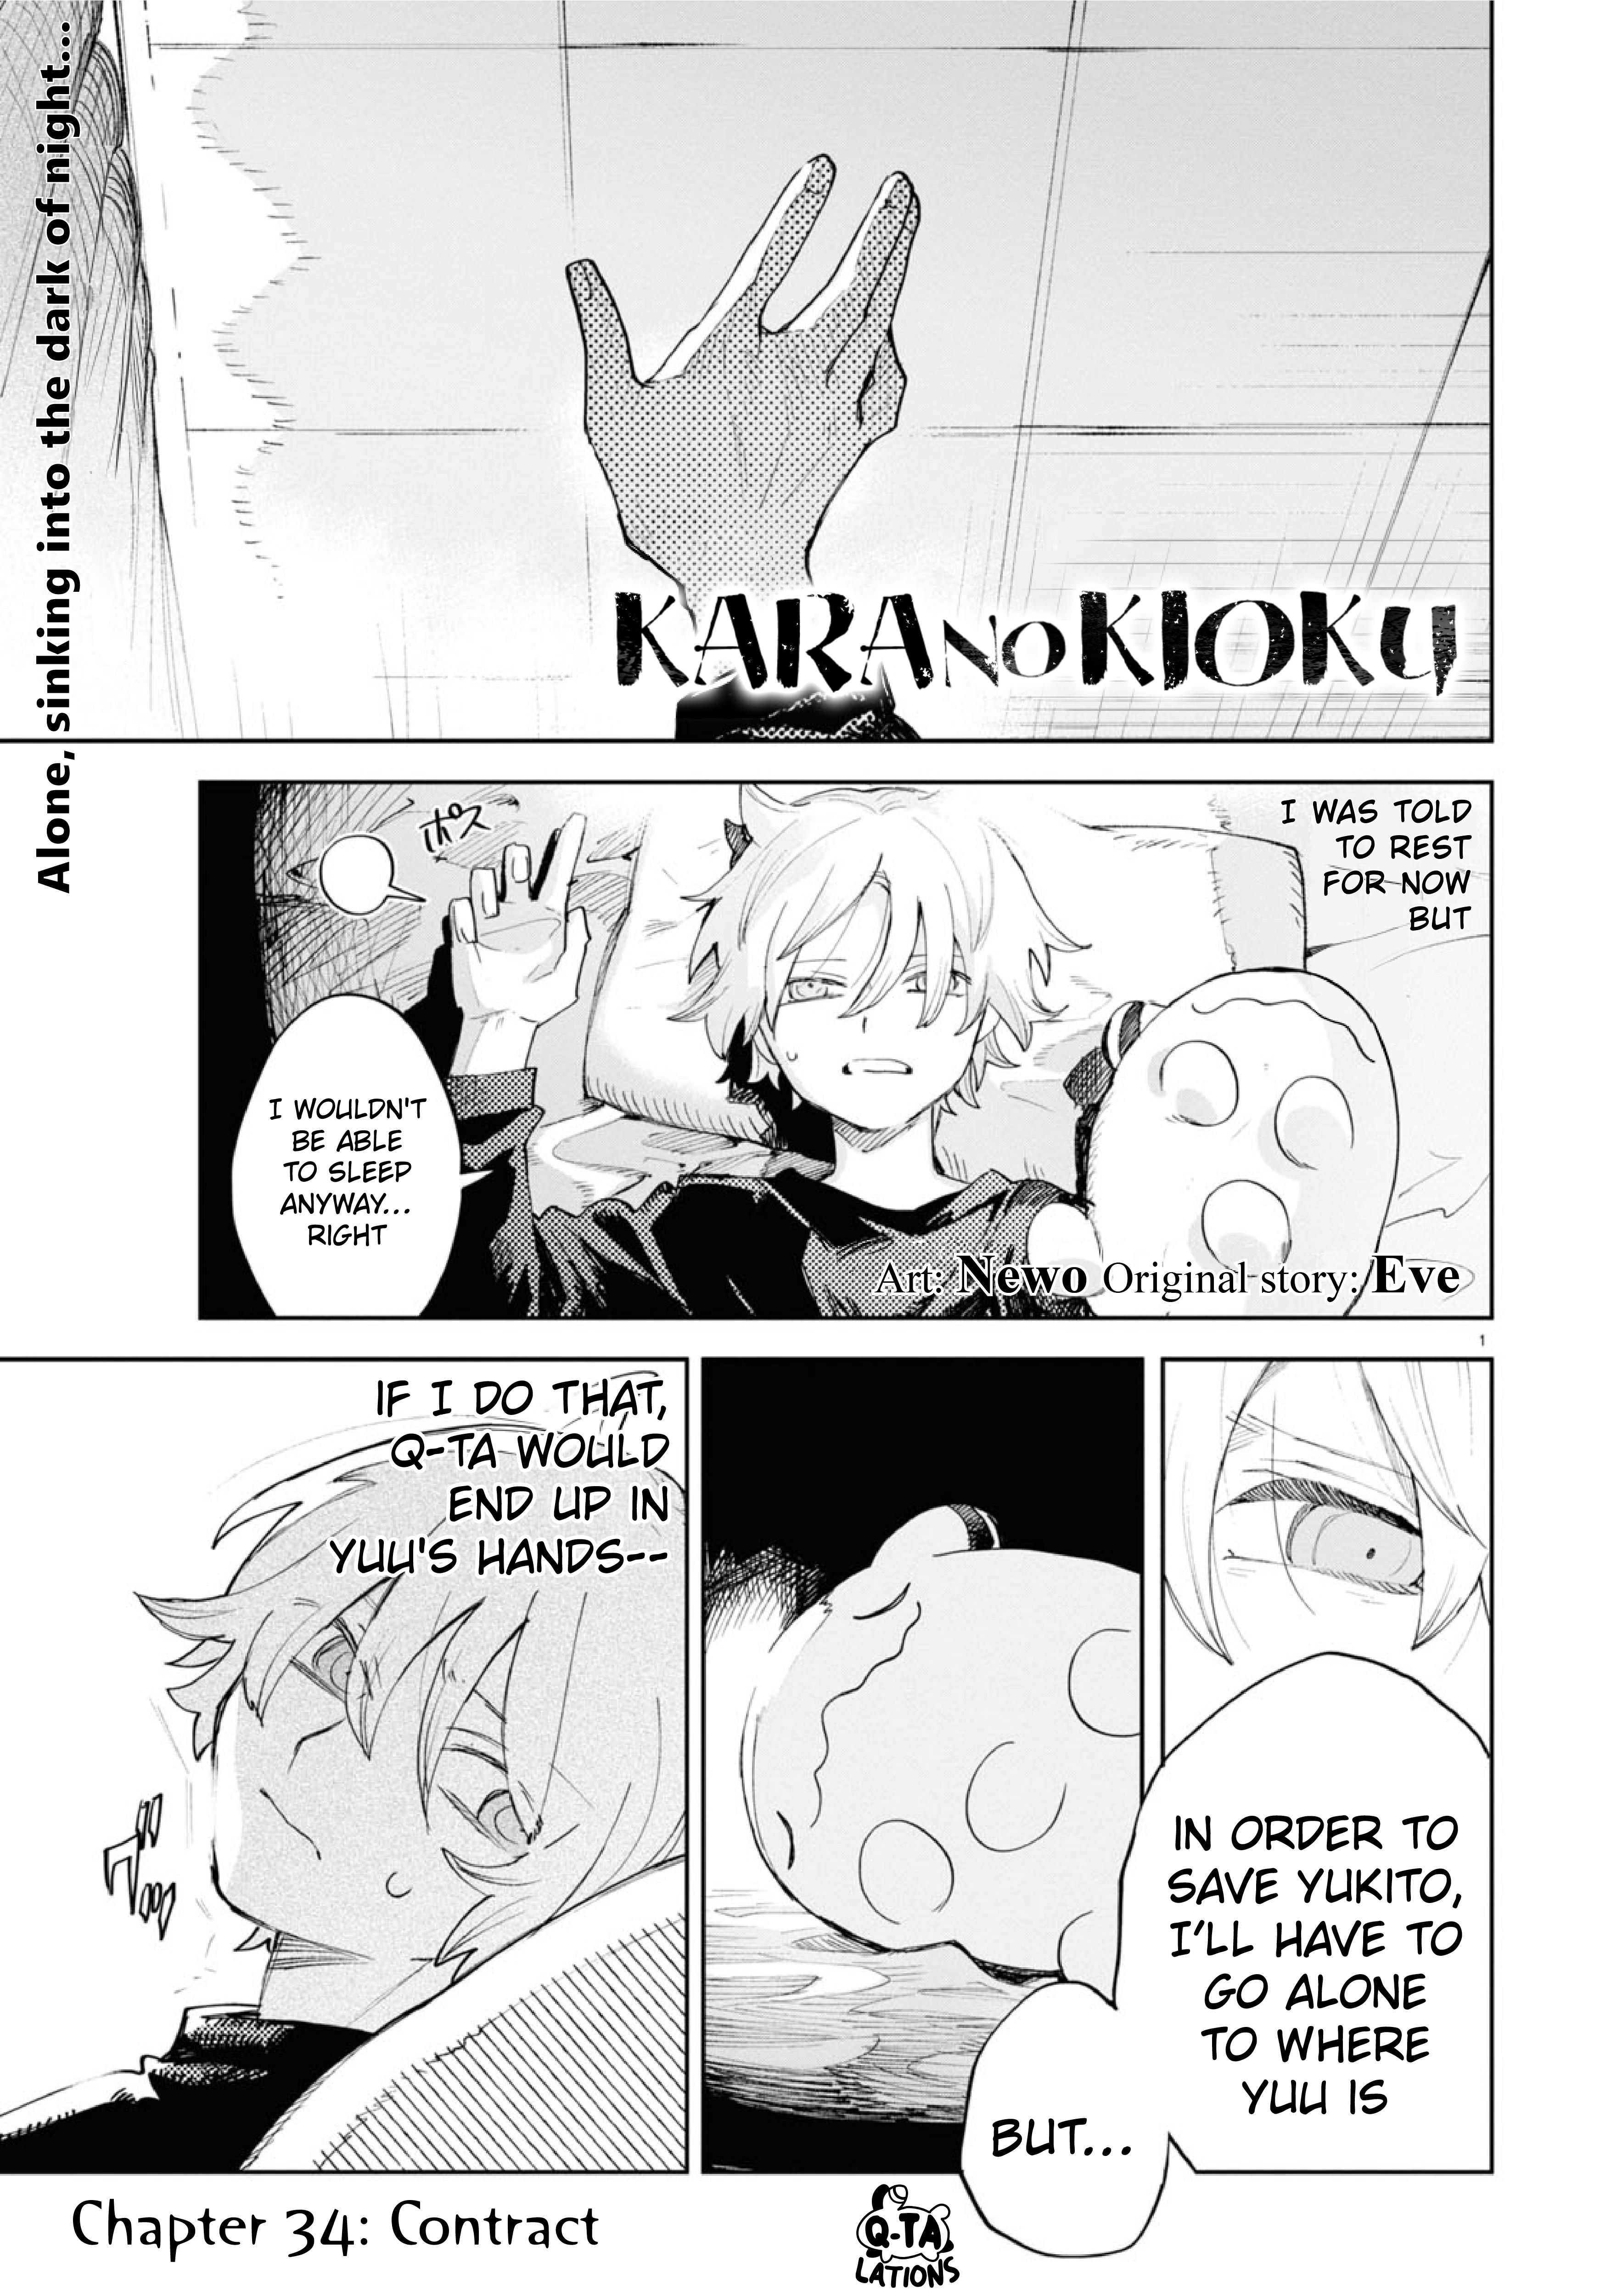 Kara No Kioku Vol.5 Chapter 34: Contract - Picture 1